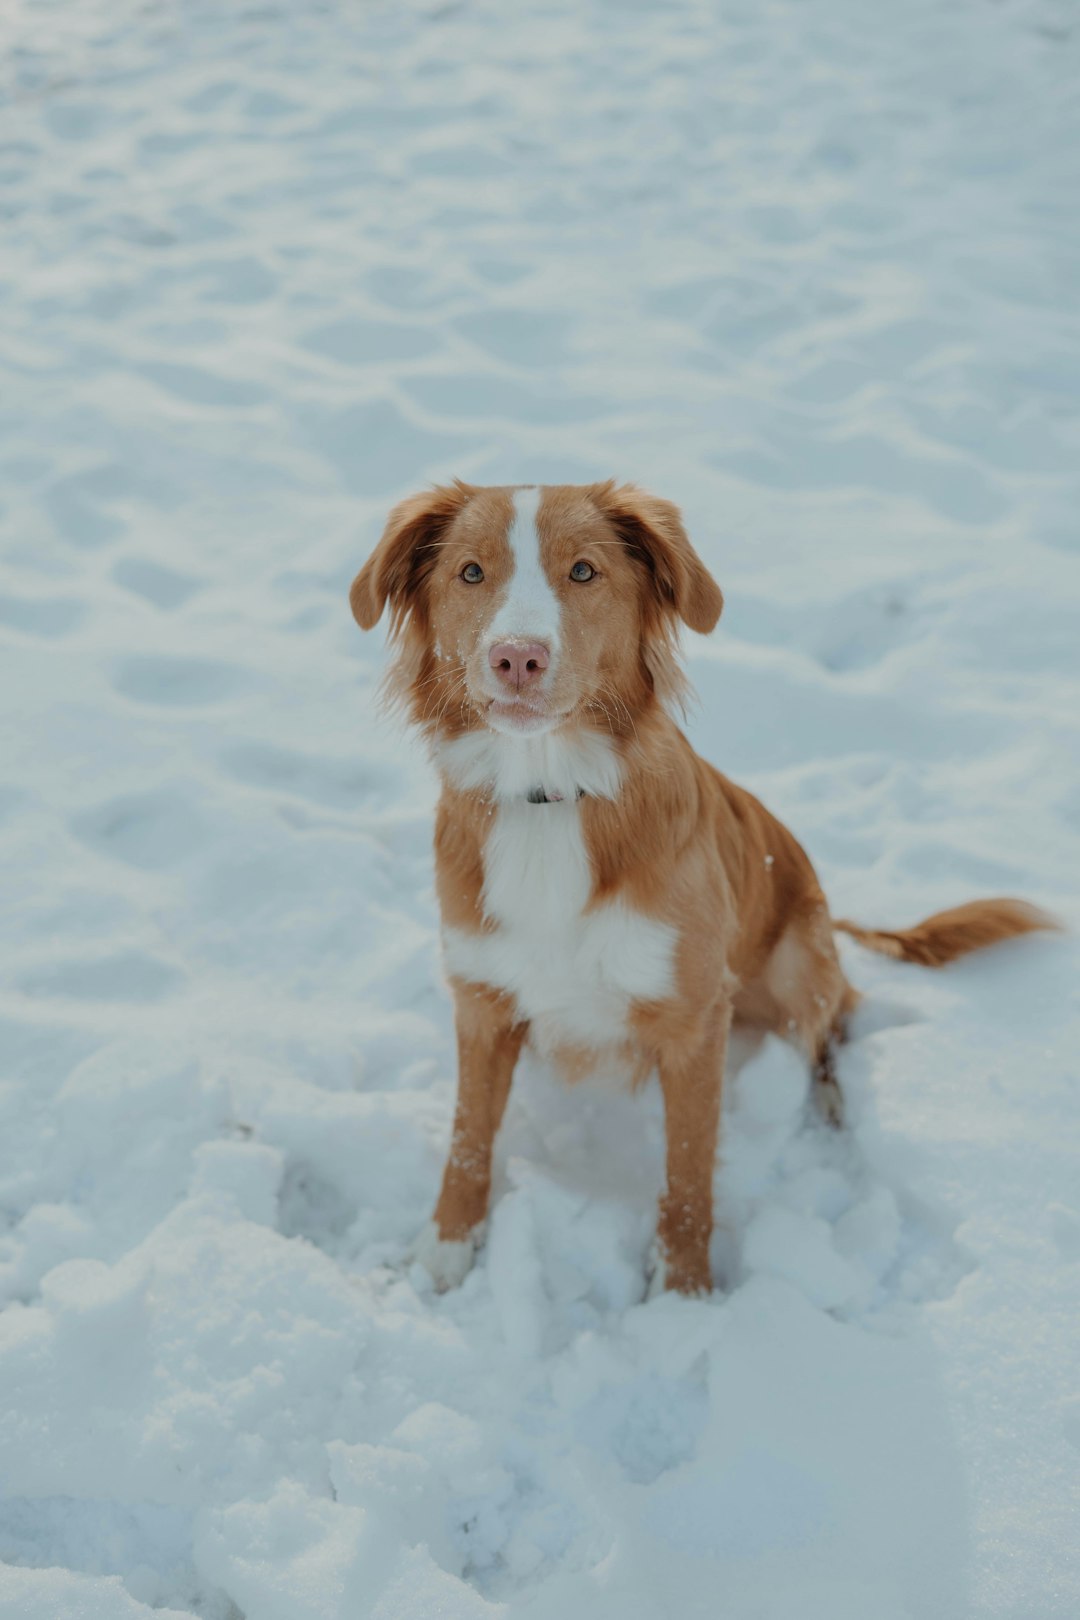 brown and white short coat medium dog running on snow covered ground during daytime